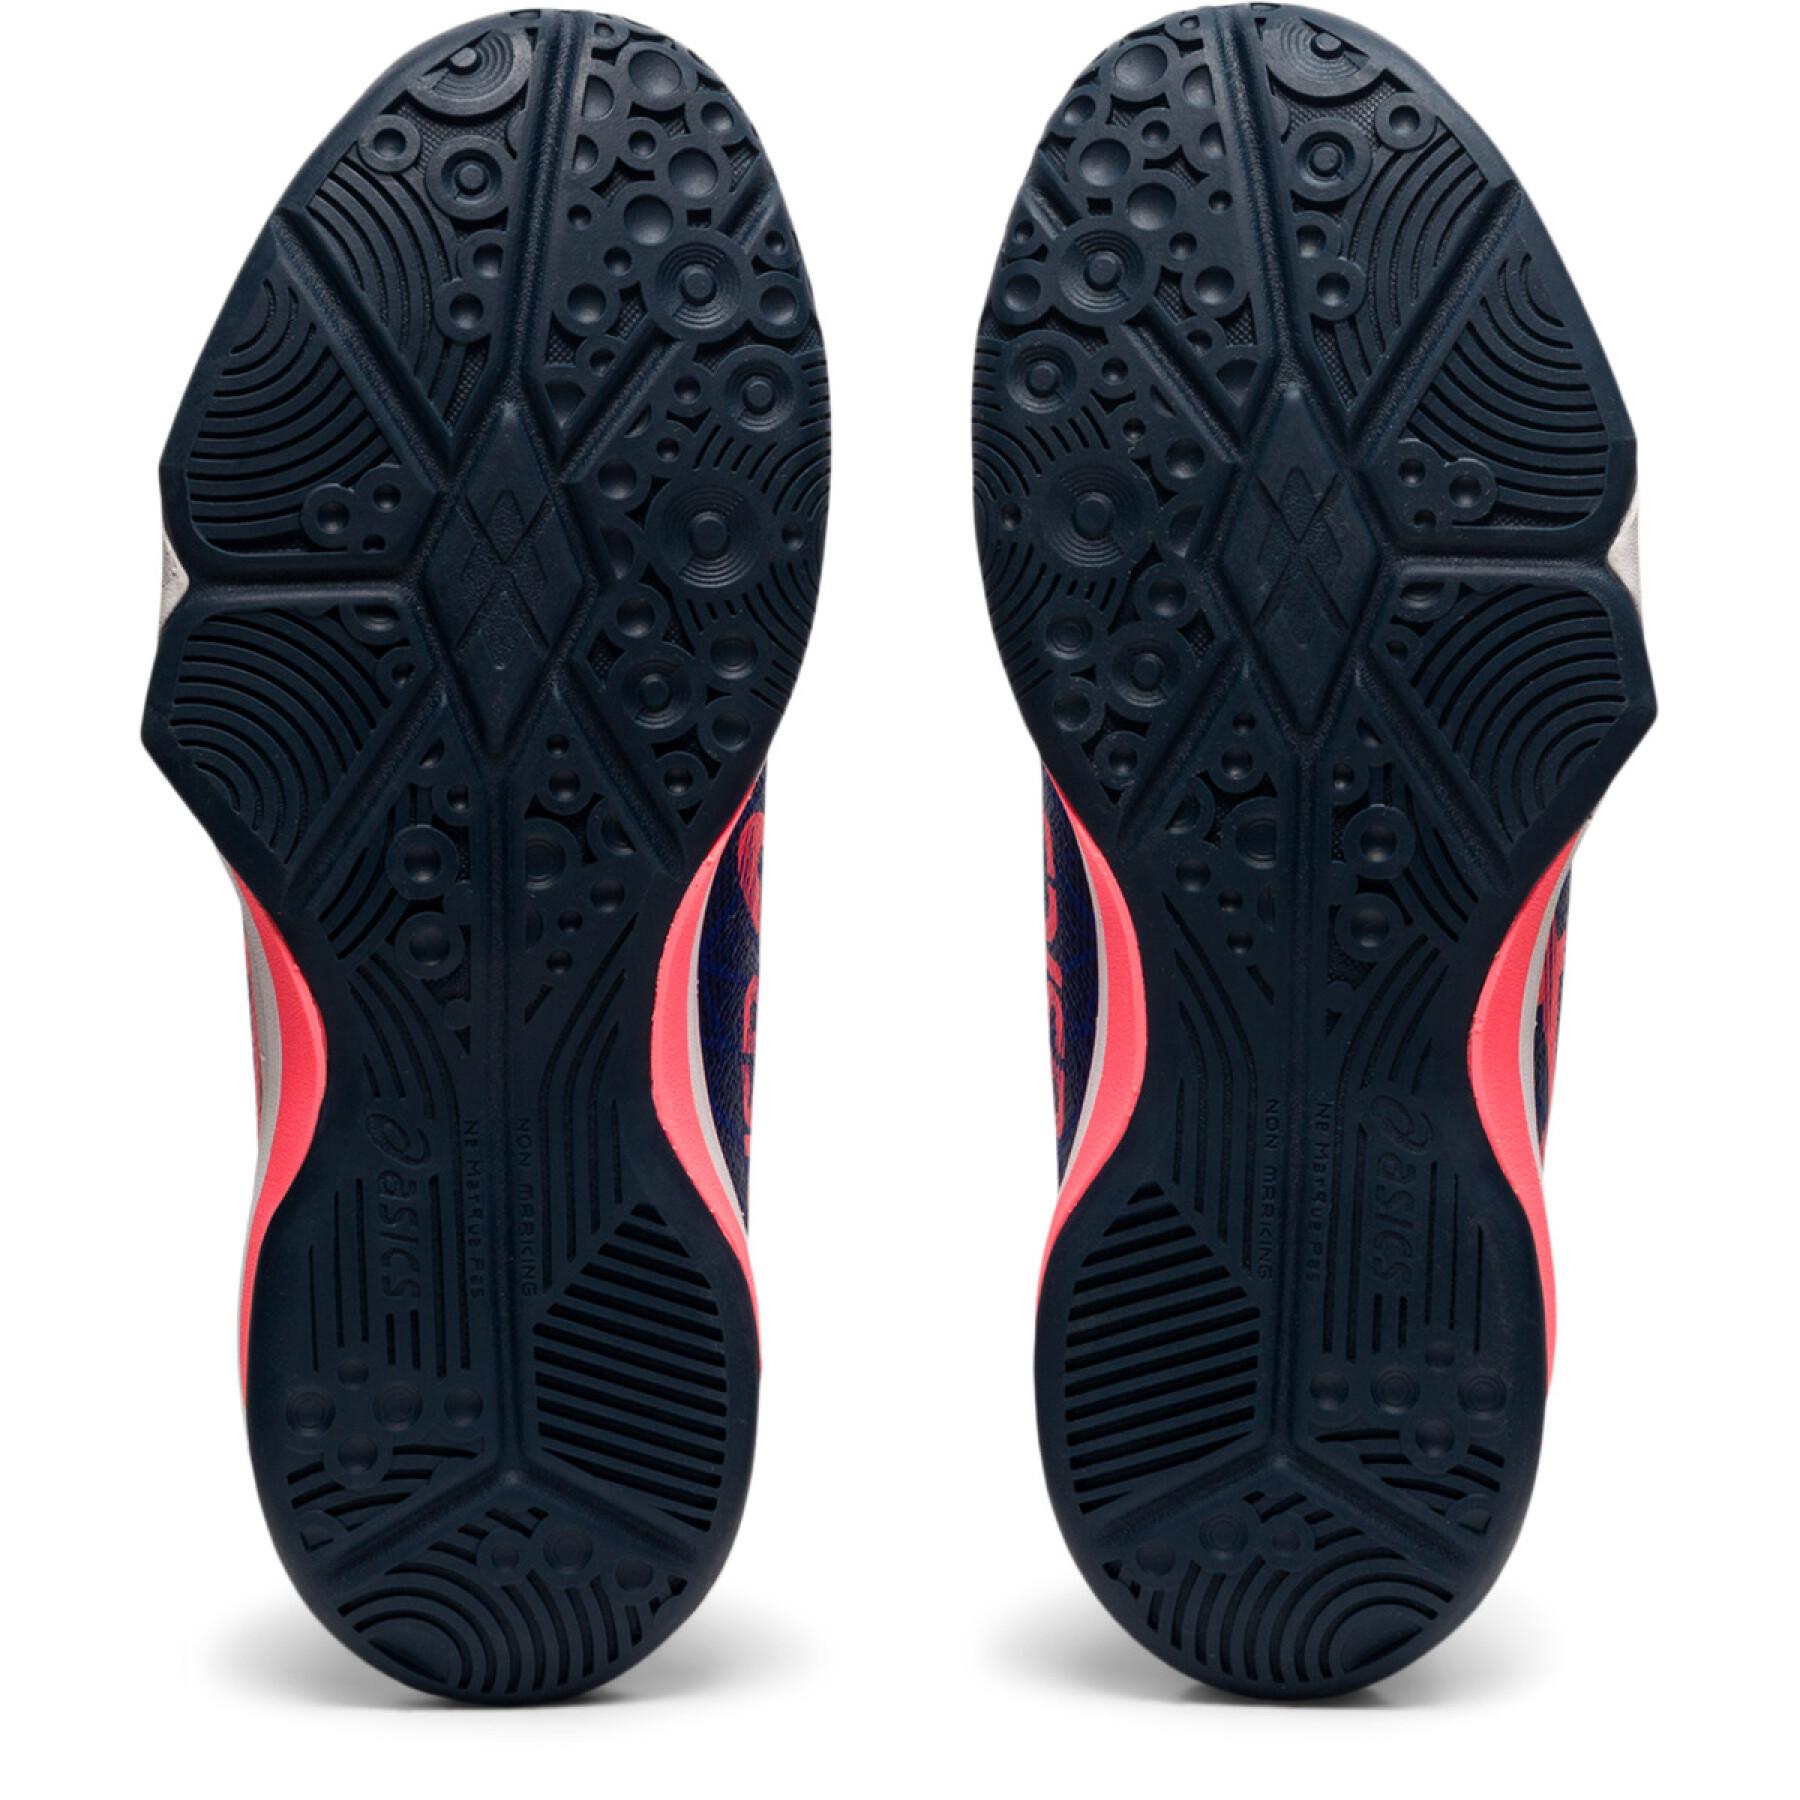 Women's shoes Asics Gel-Fastball 3